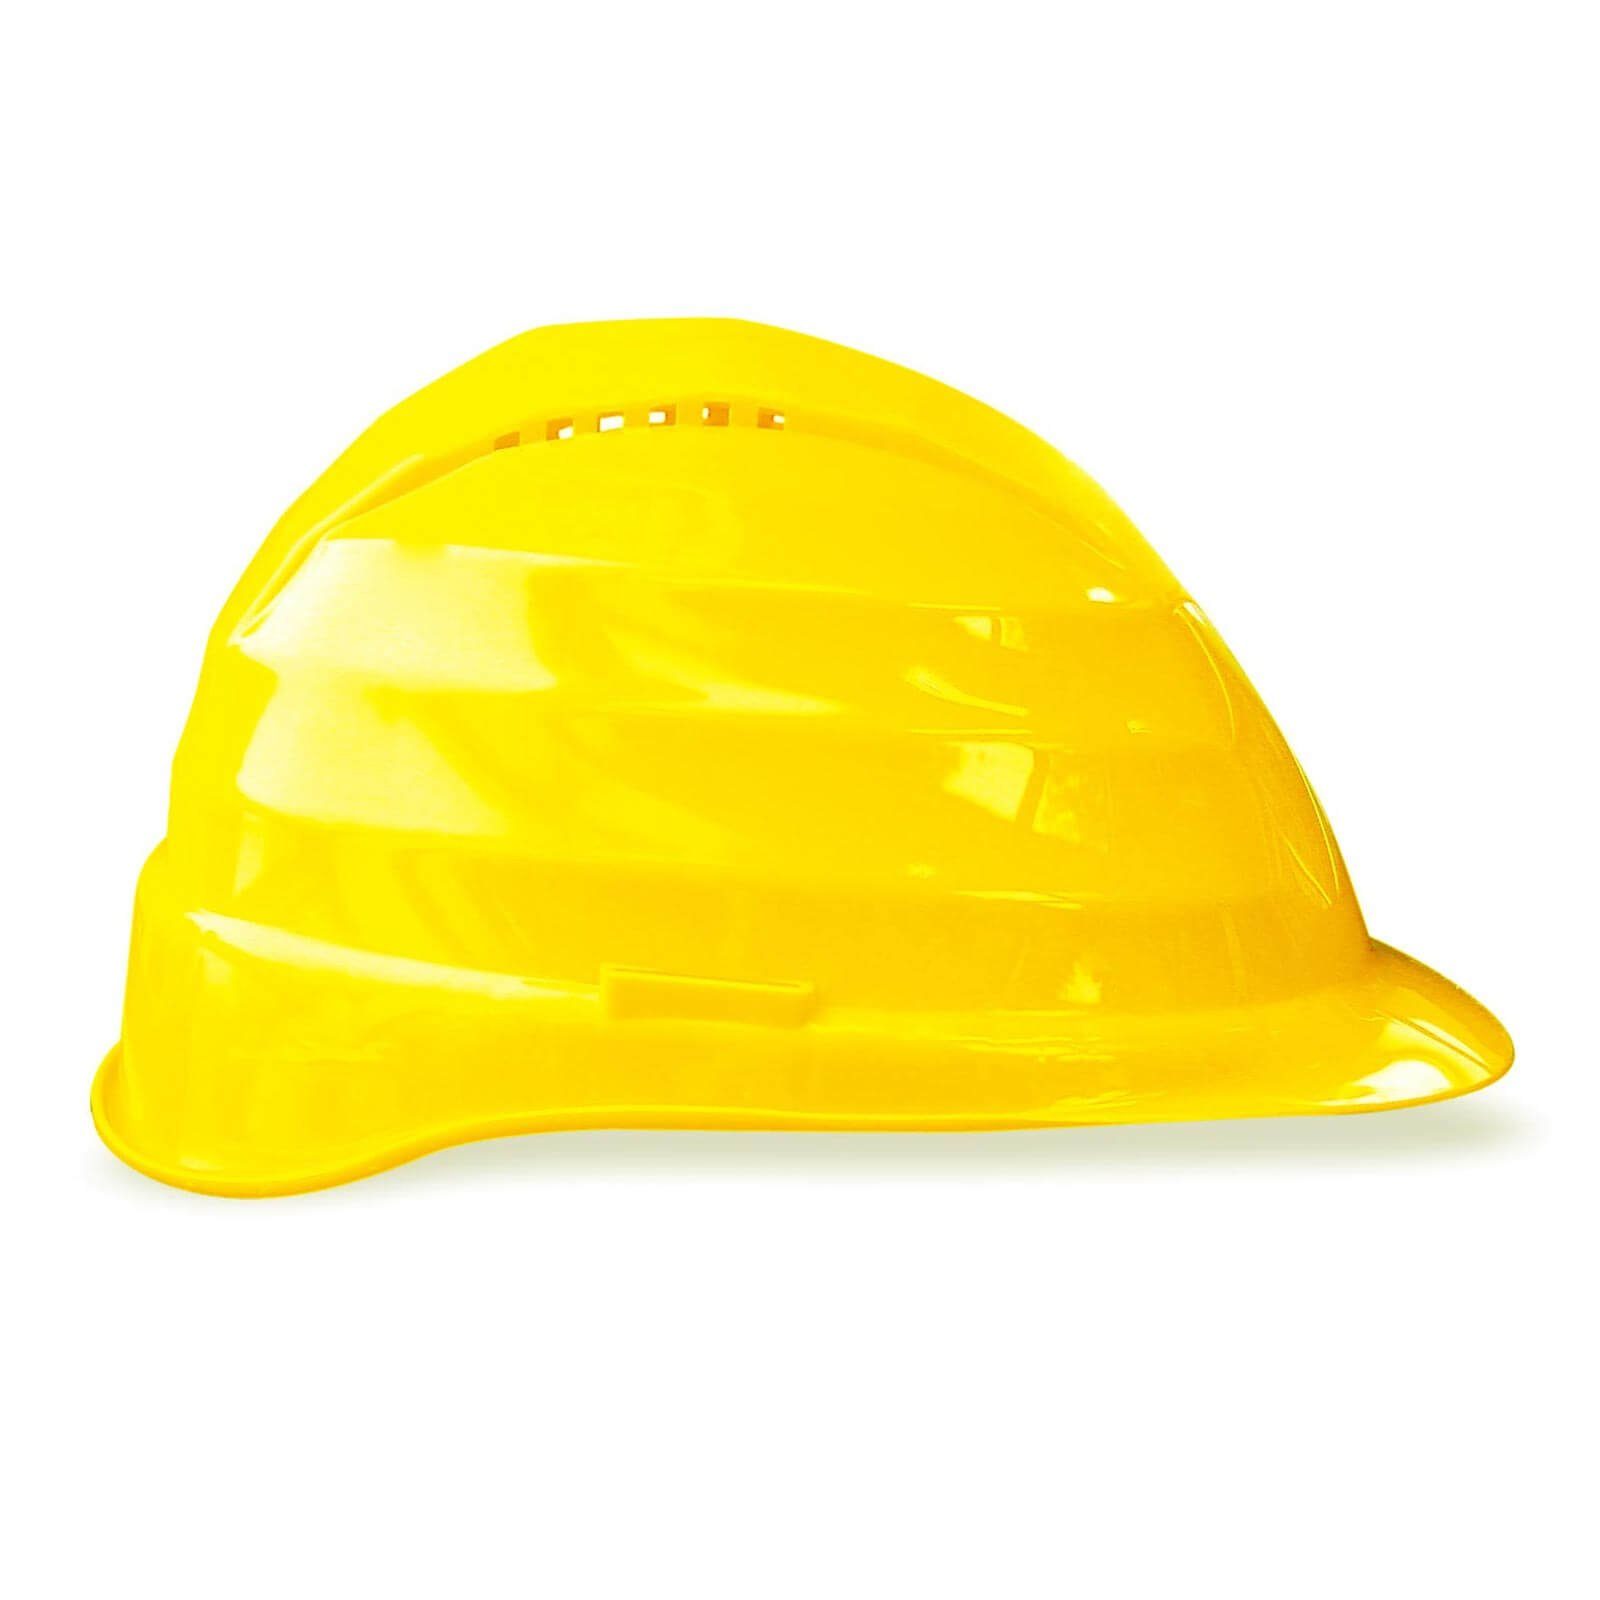 ENHA Schutzhelm ENHA ROCKMANN C6 Schutzhelm - Arbeitsschutzhelm, Sturzhelm, Helm gelb